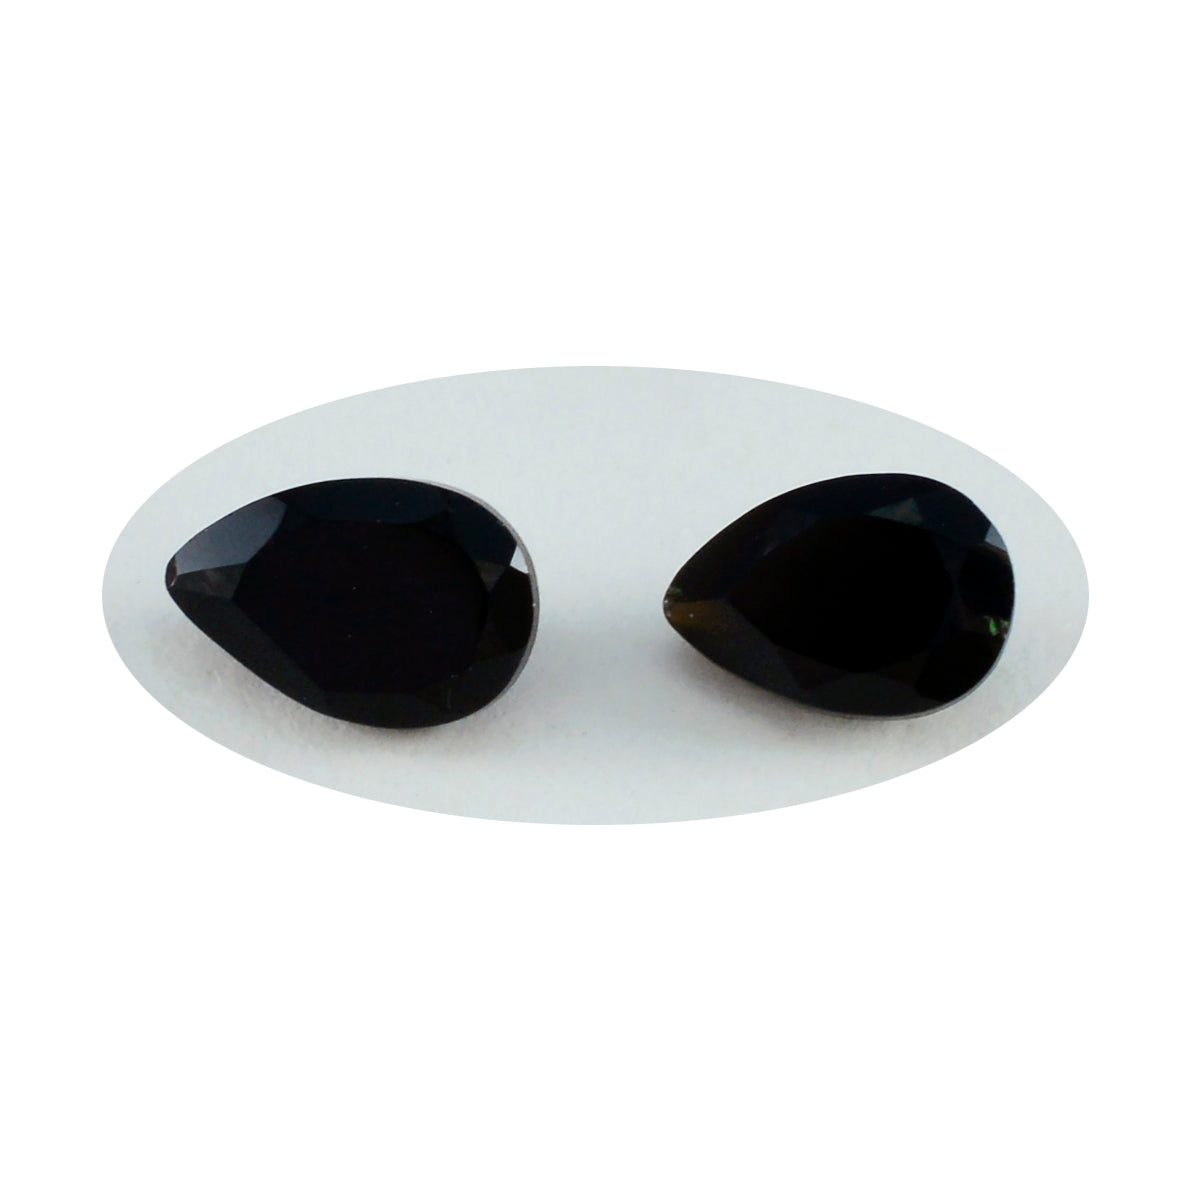 Riyogems 1PC Real Black Onyx Faceted 5x7 mm Pear Shape A Quality Loose Gemstone